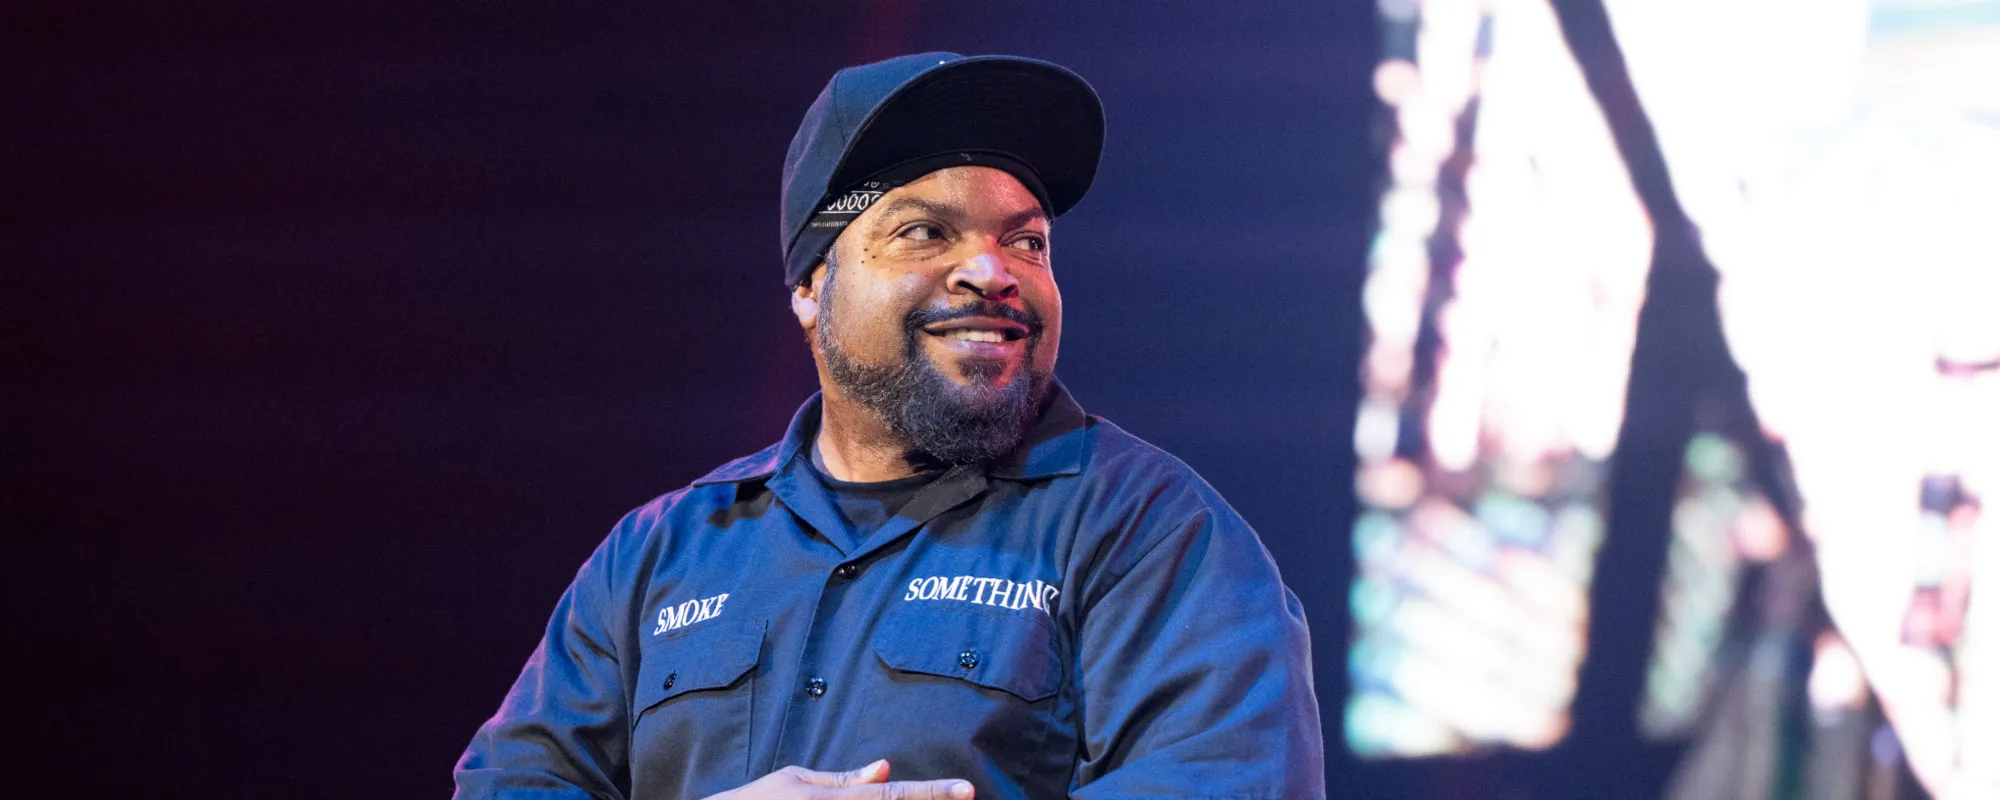 Ice Cube's best album: 'Death Certificate' or 'The Predator